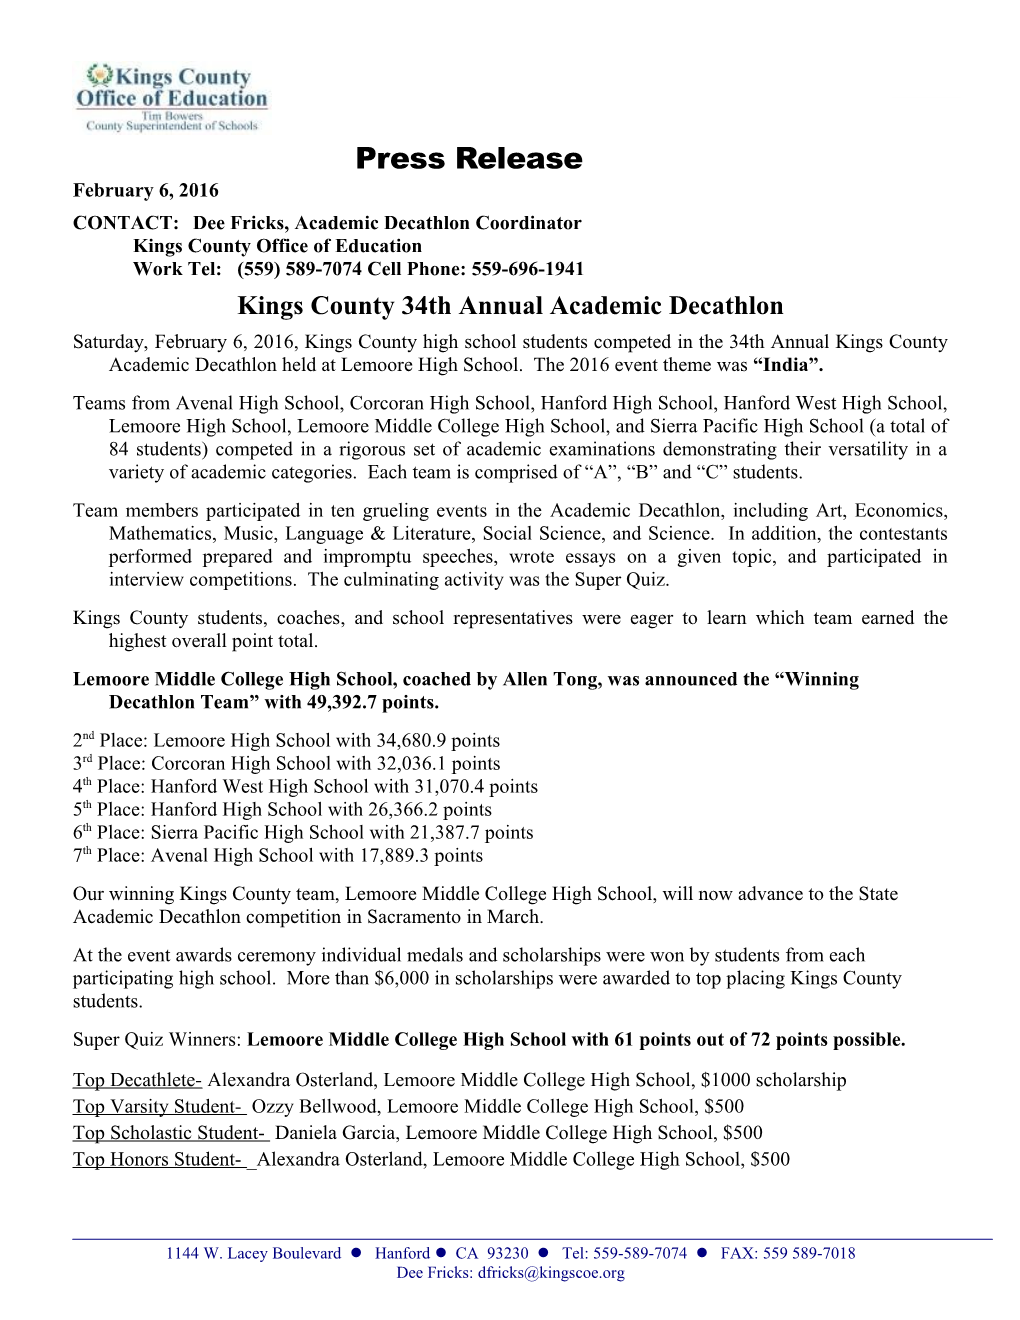 Kings County 34Th Annual Academic Decathlon